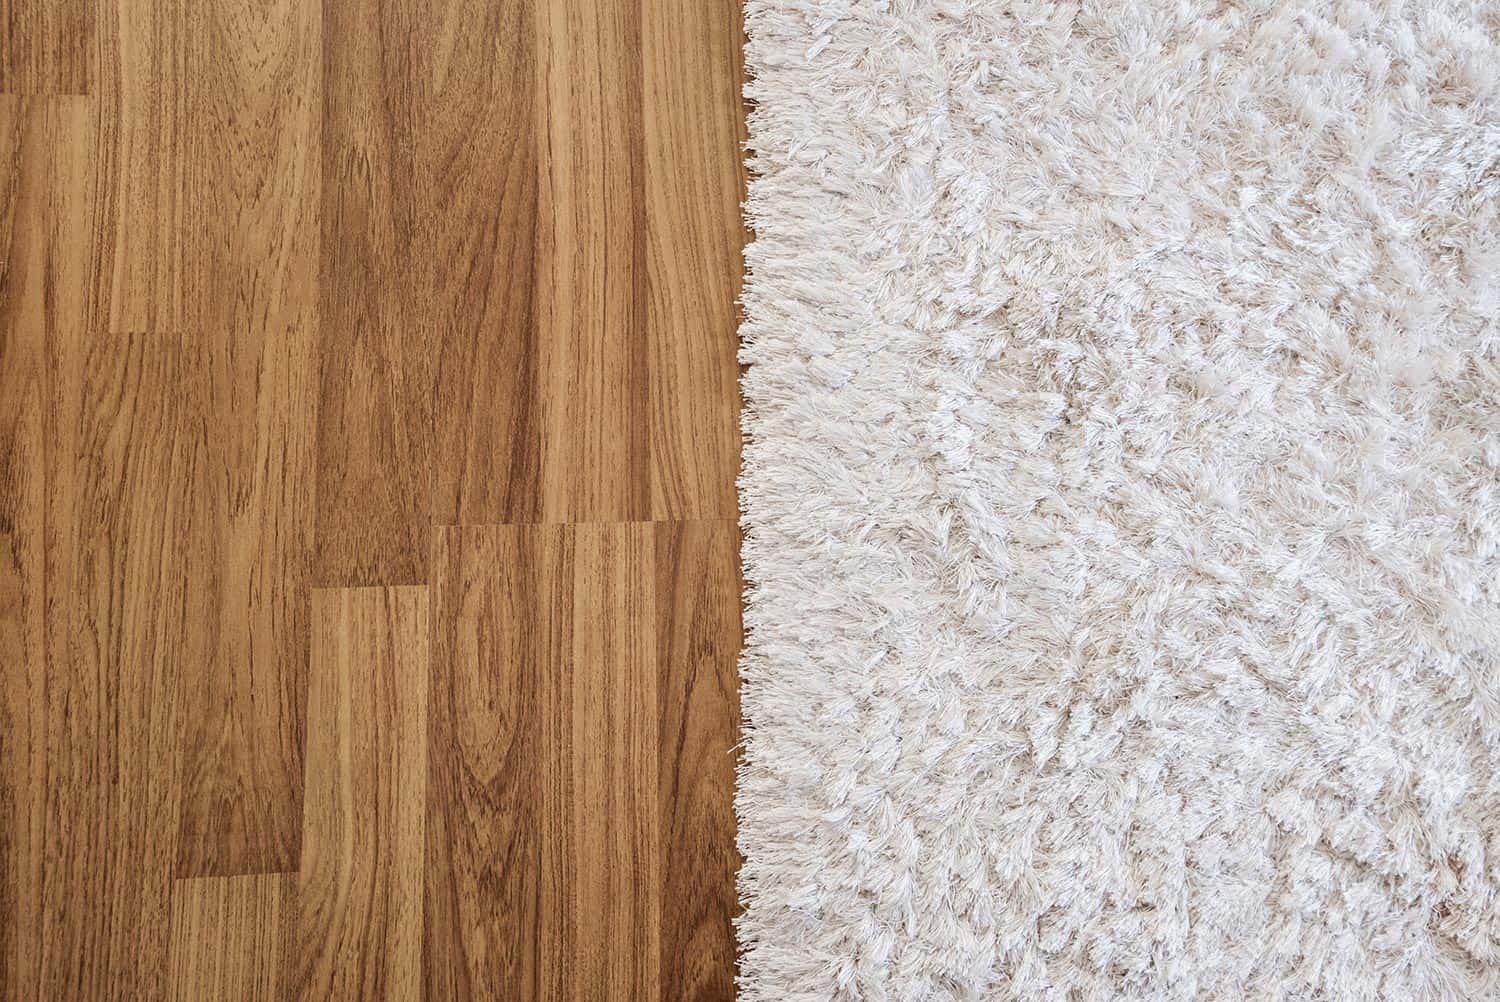 Luxury white carpet on laminate wood floor in living room